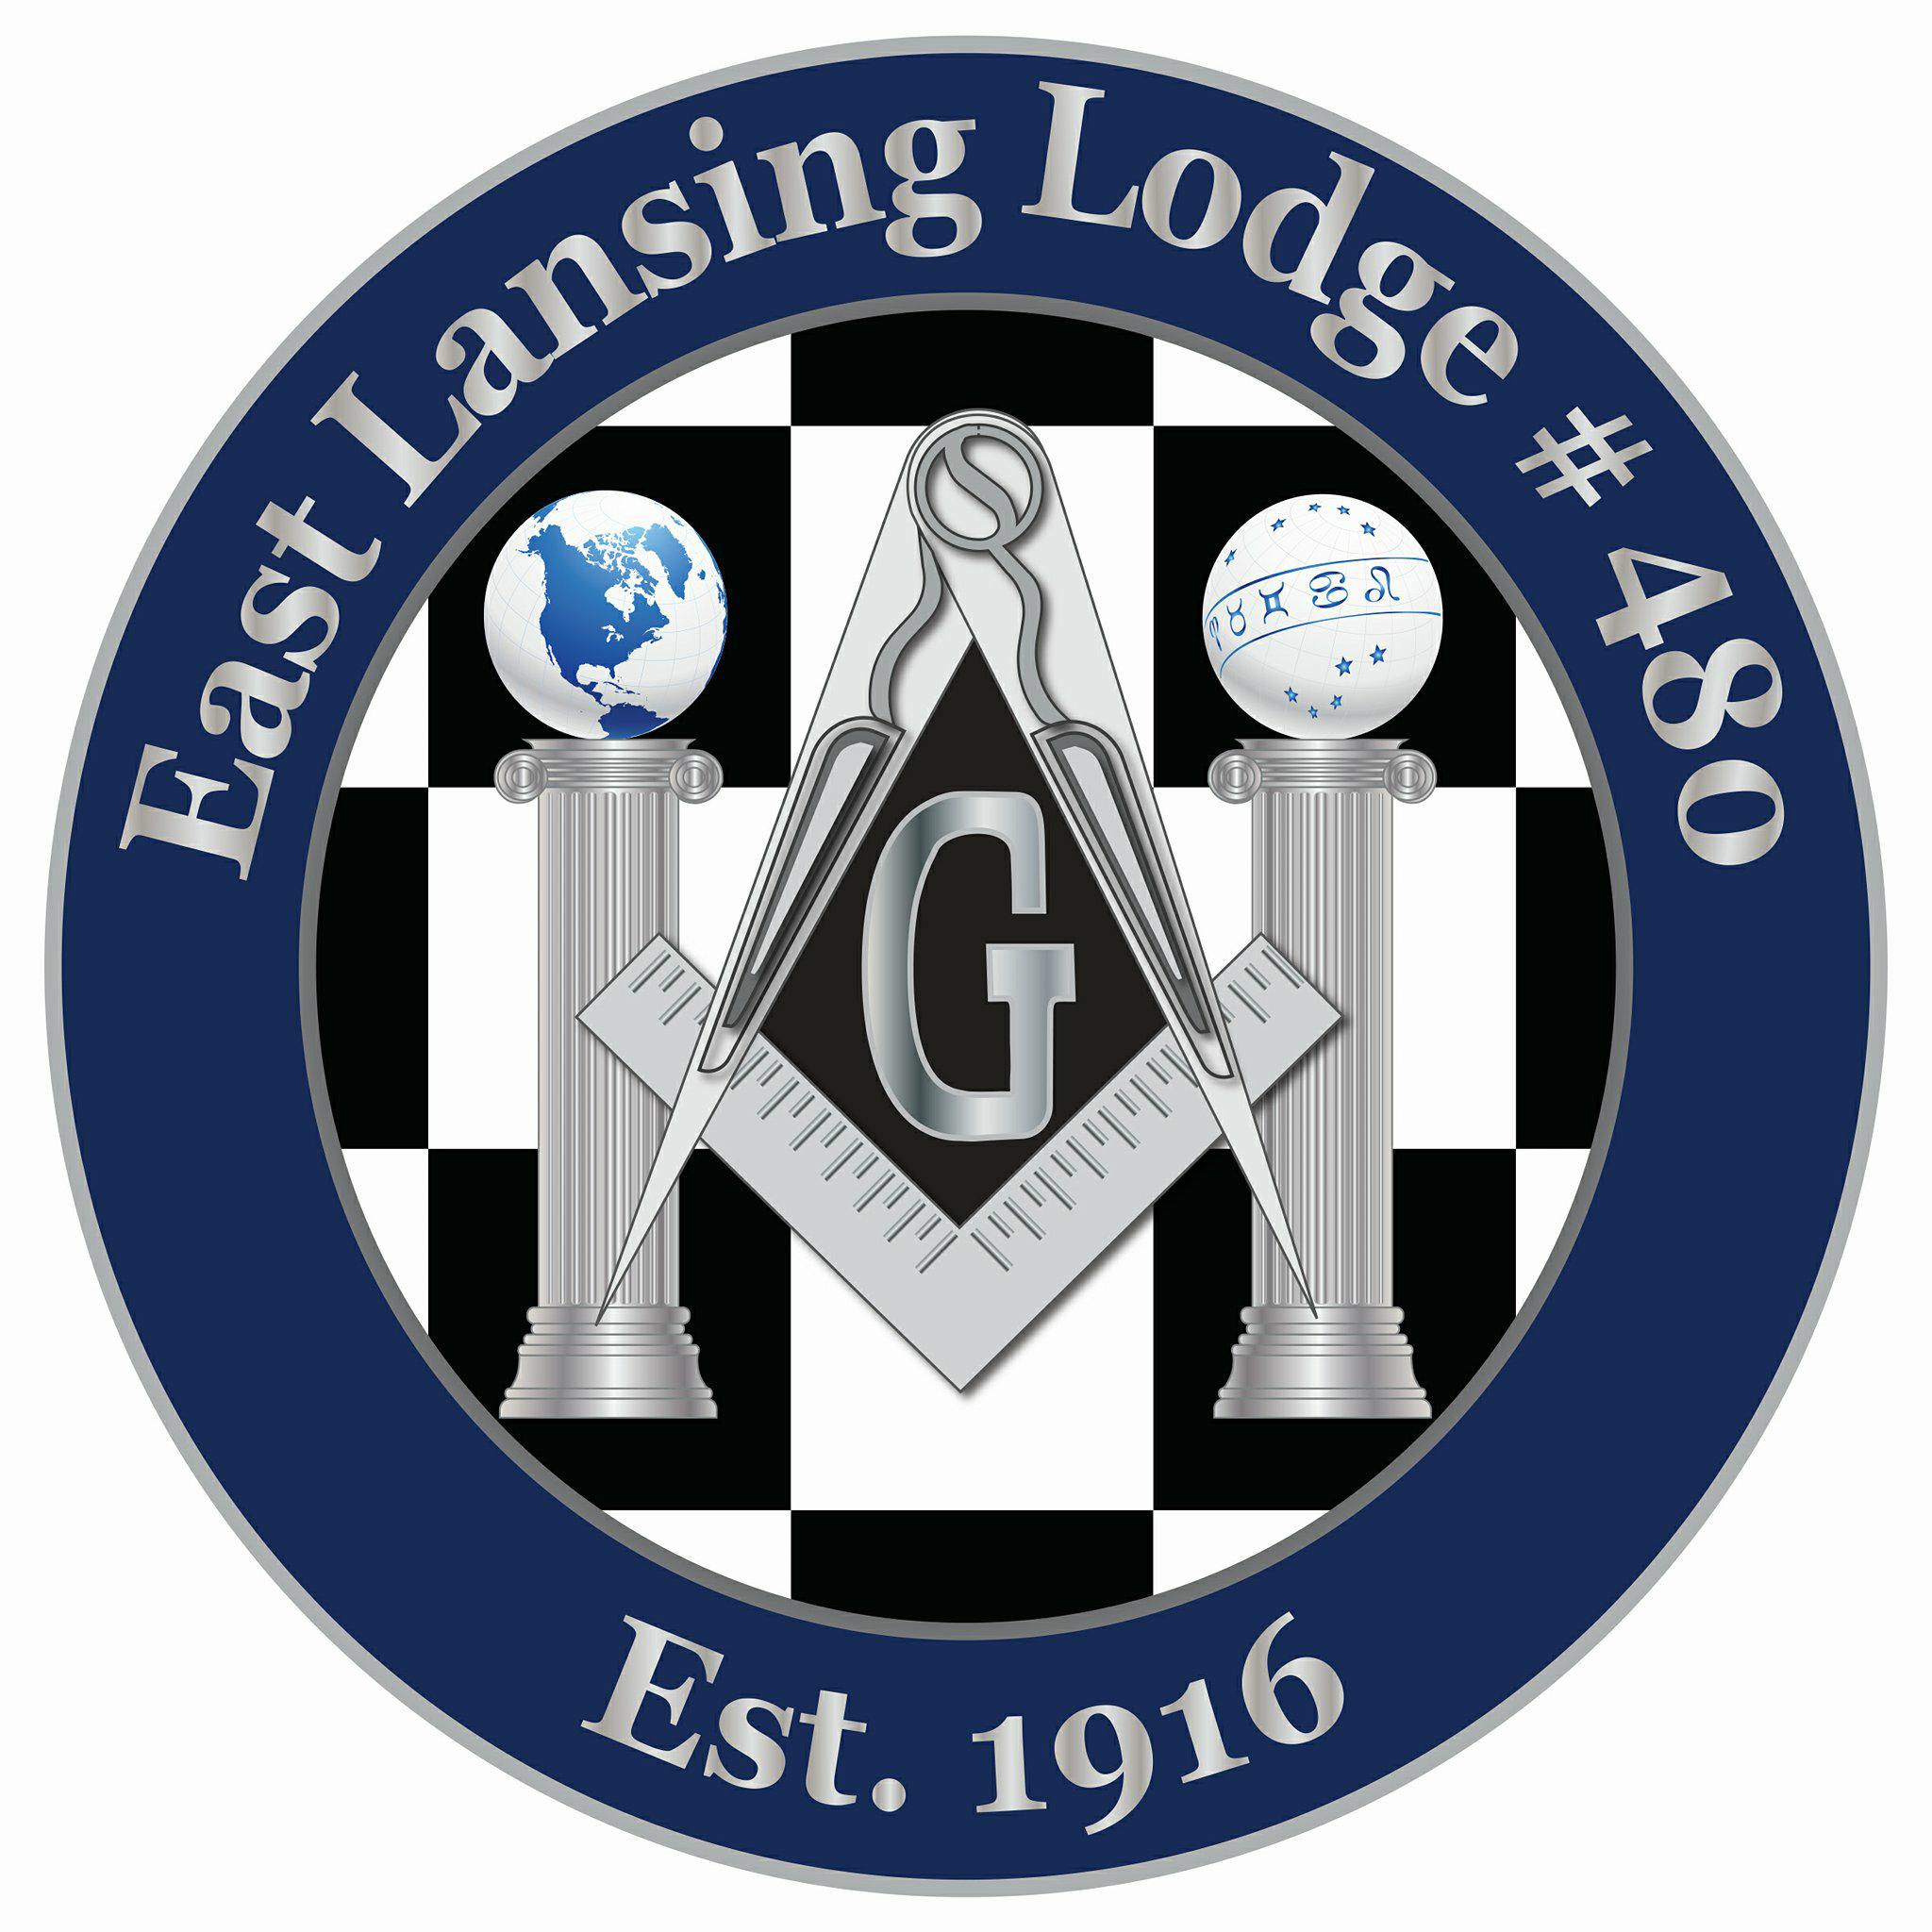 New Lodge Logo